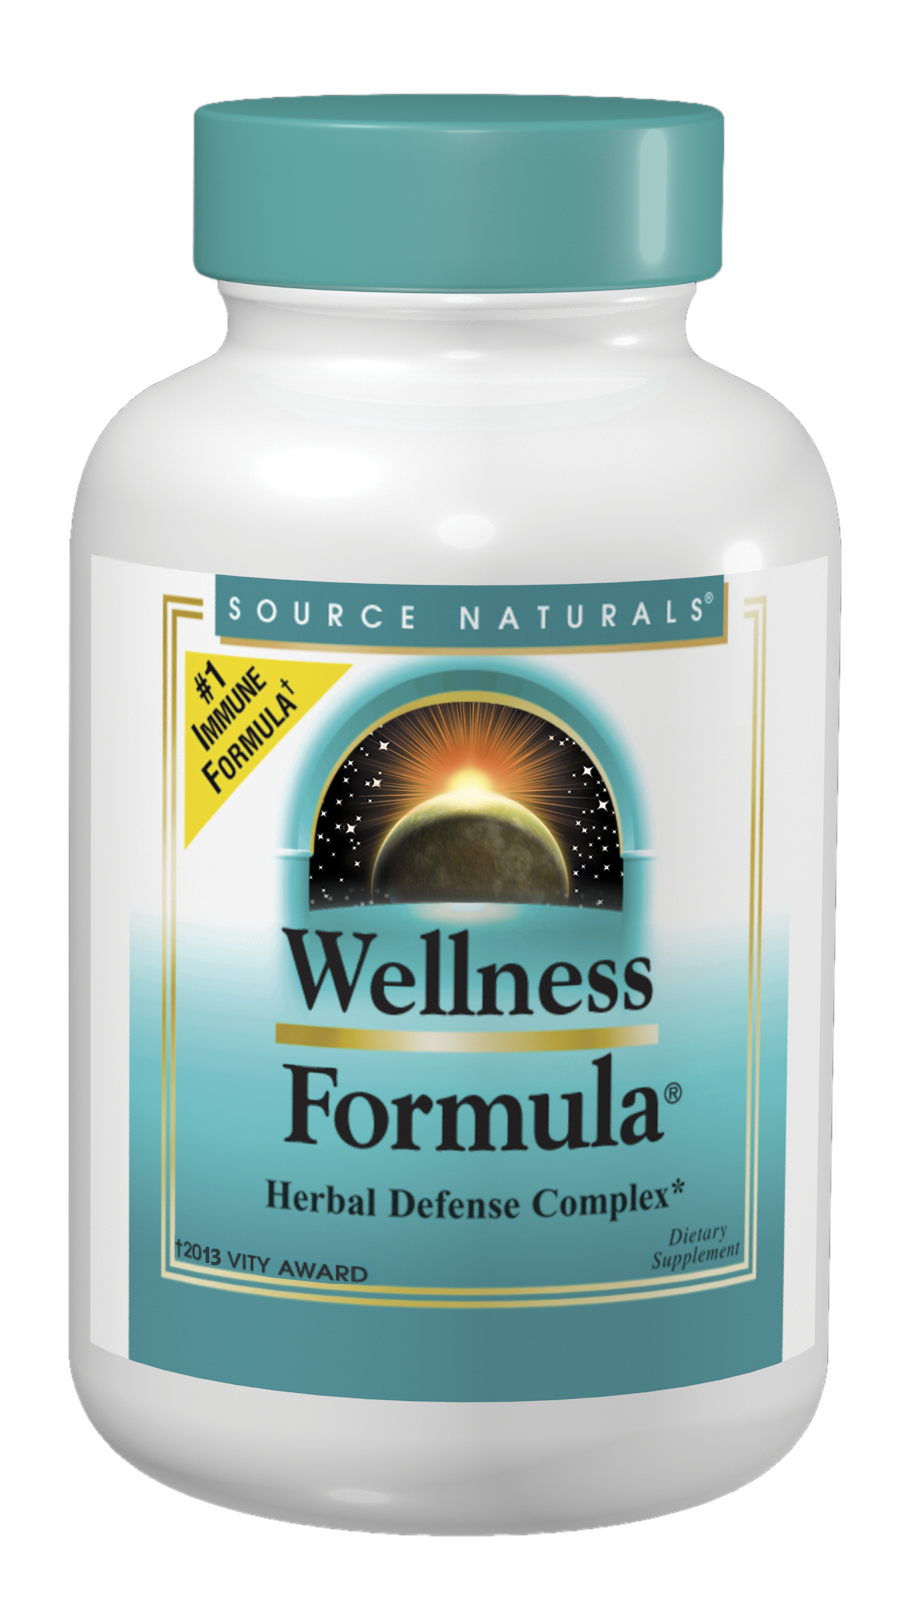 Wellness Formula by Source Naturals